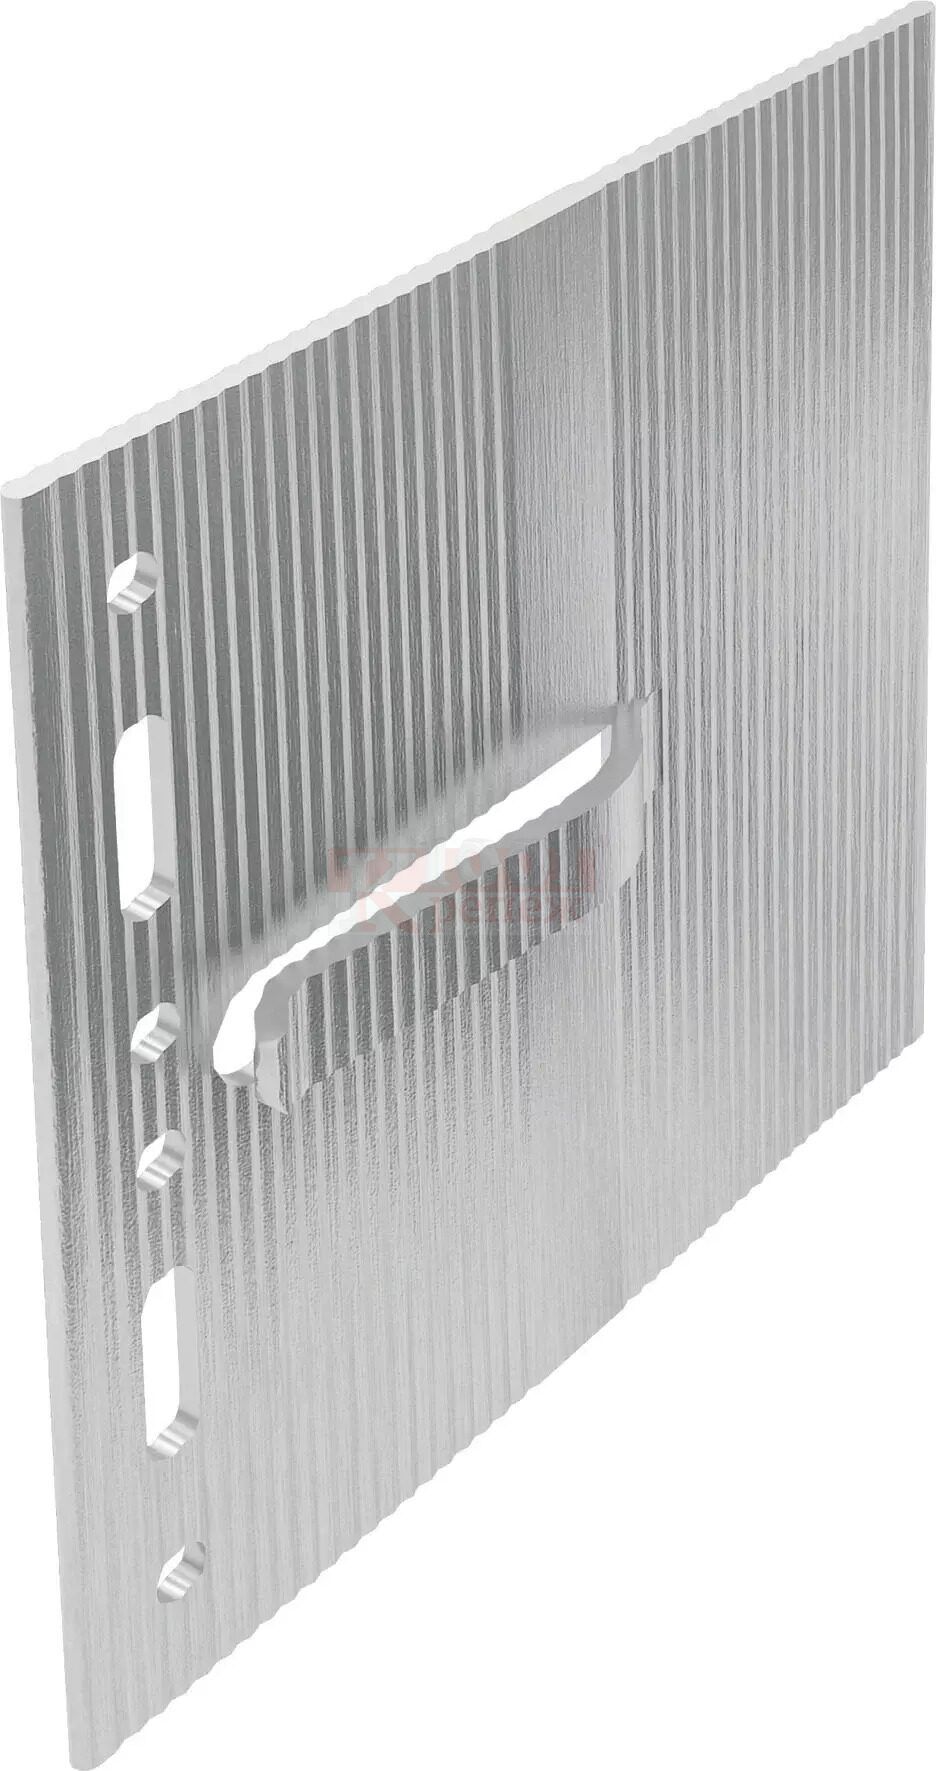 MFT-DF Удлинитель HILTI кронштейна для фасадных систем алюминий, 125x110 мм